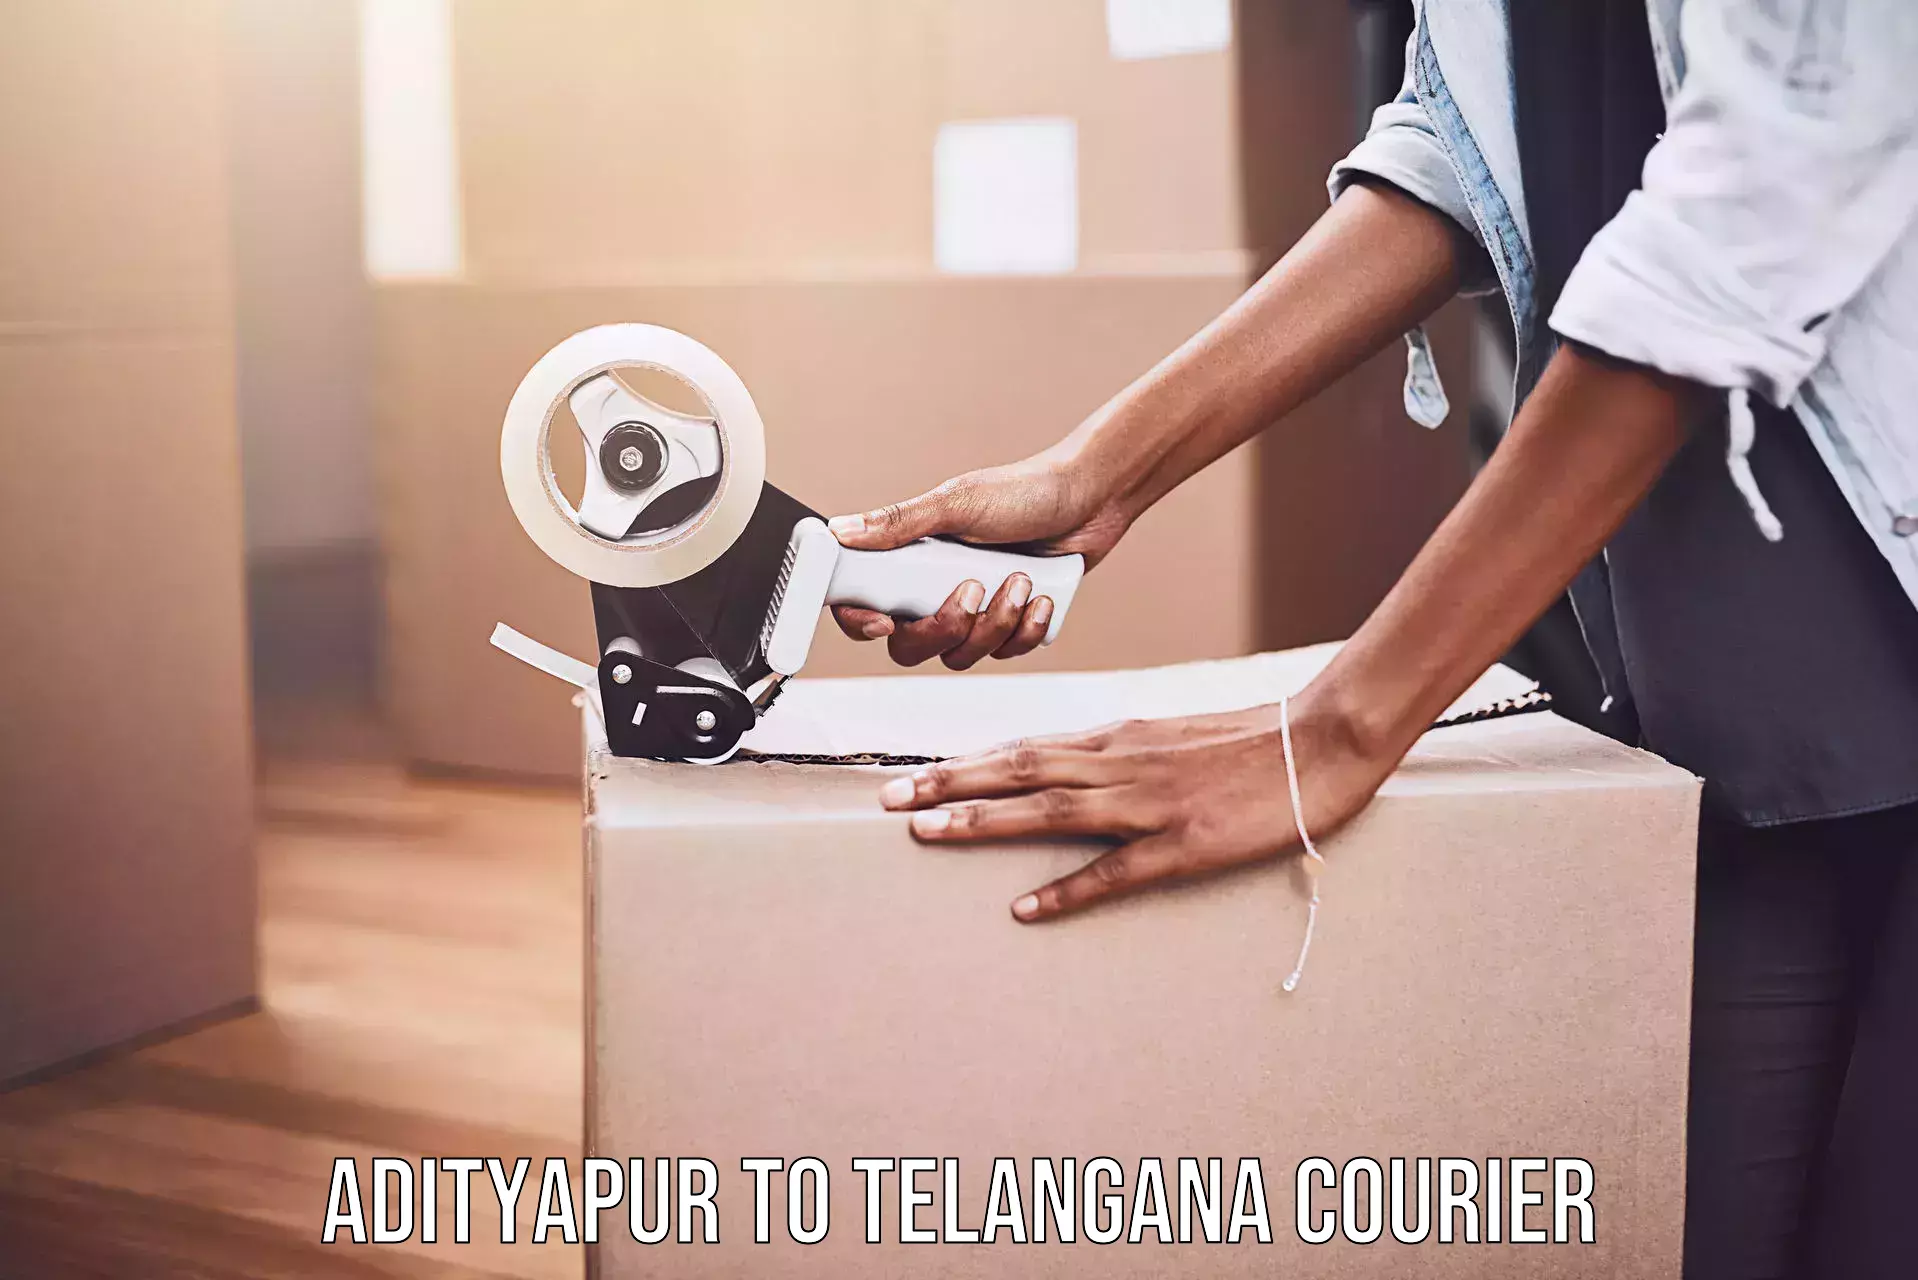 International courier networks Adityapur to Veenavanka